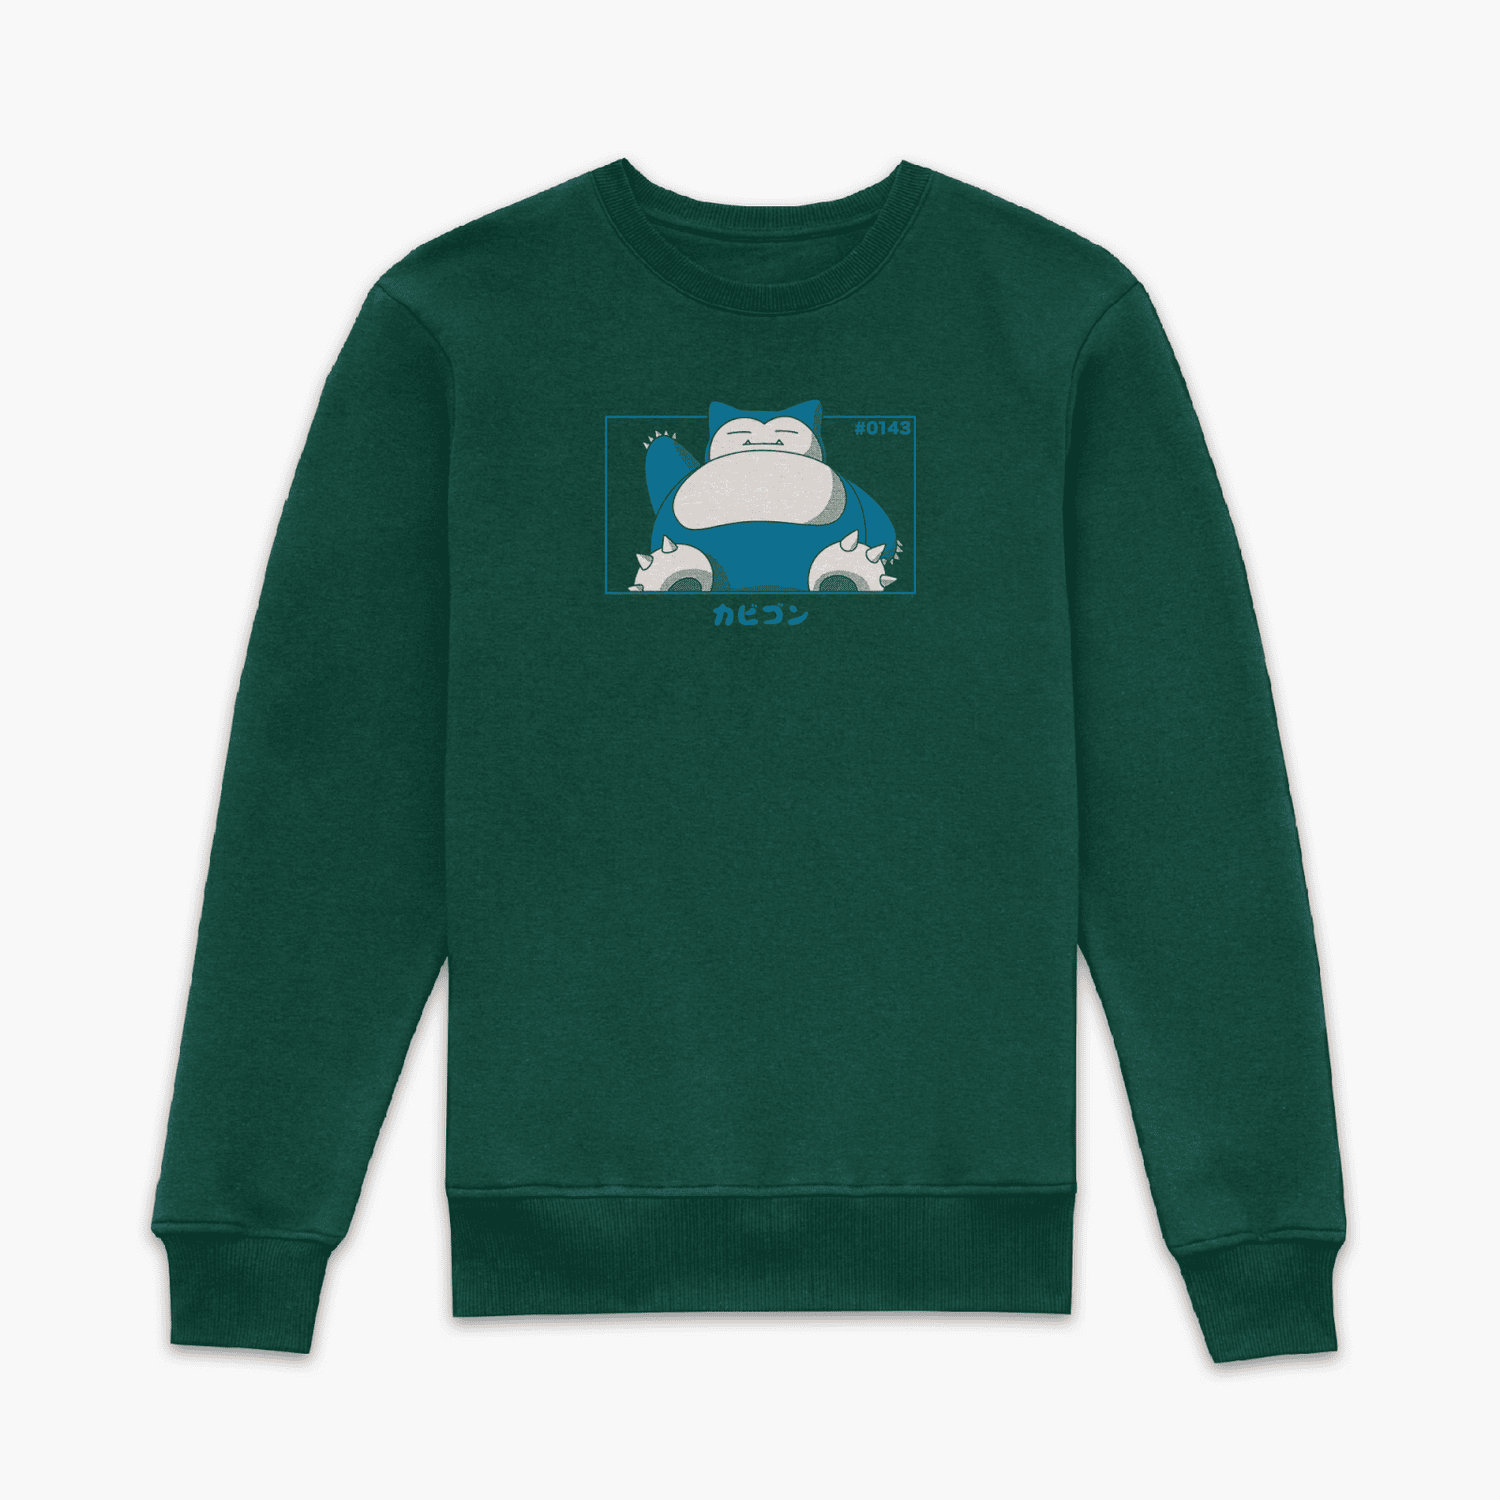 Pokémon Snorlax Sweatshirt - Green